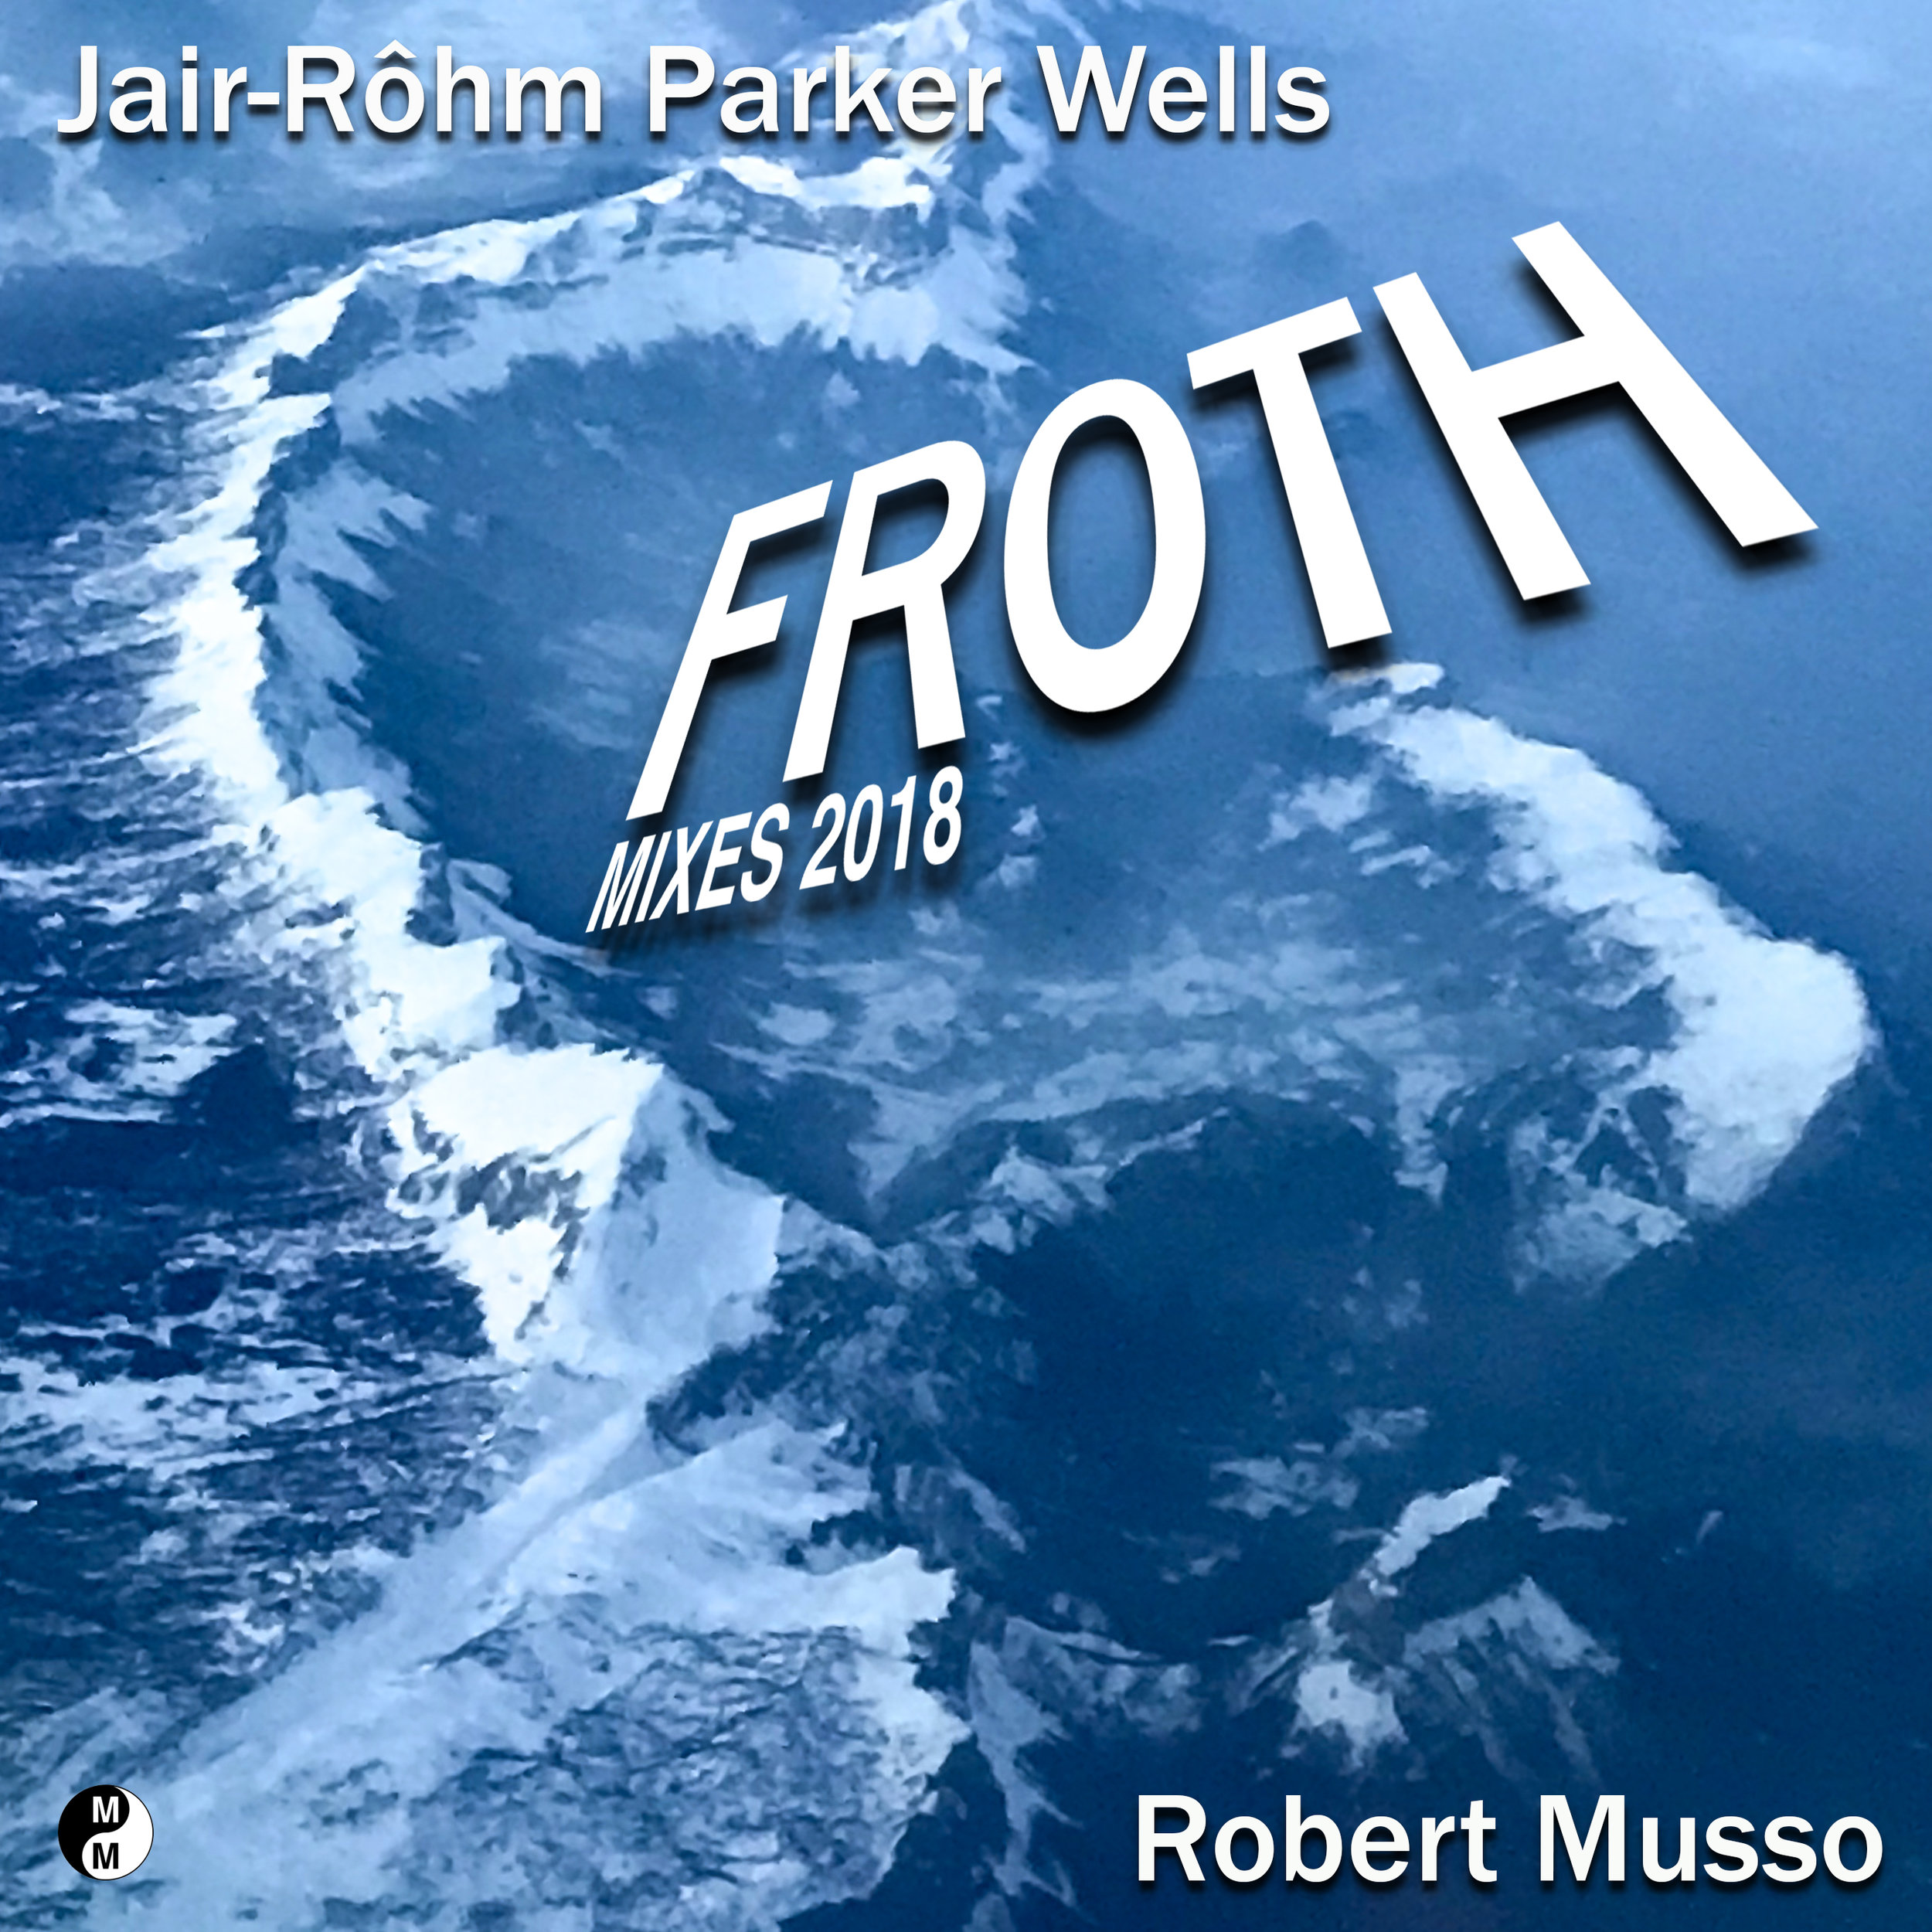 Froth – EP Jair-Rohm Parker Wells & Robert Musso 